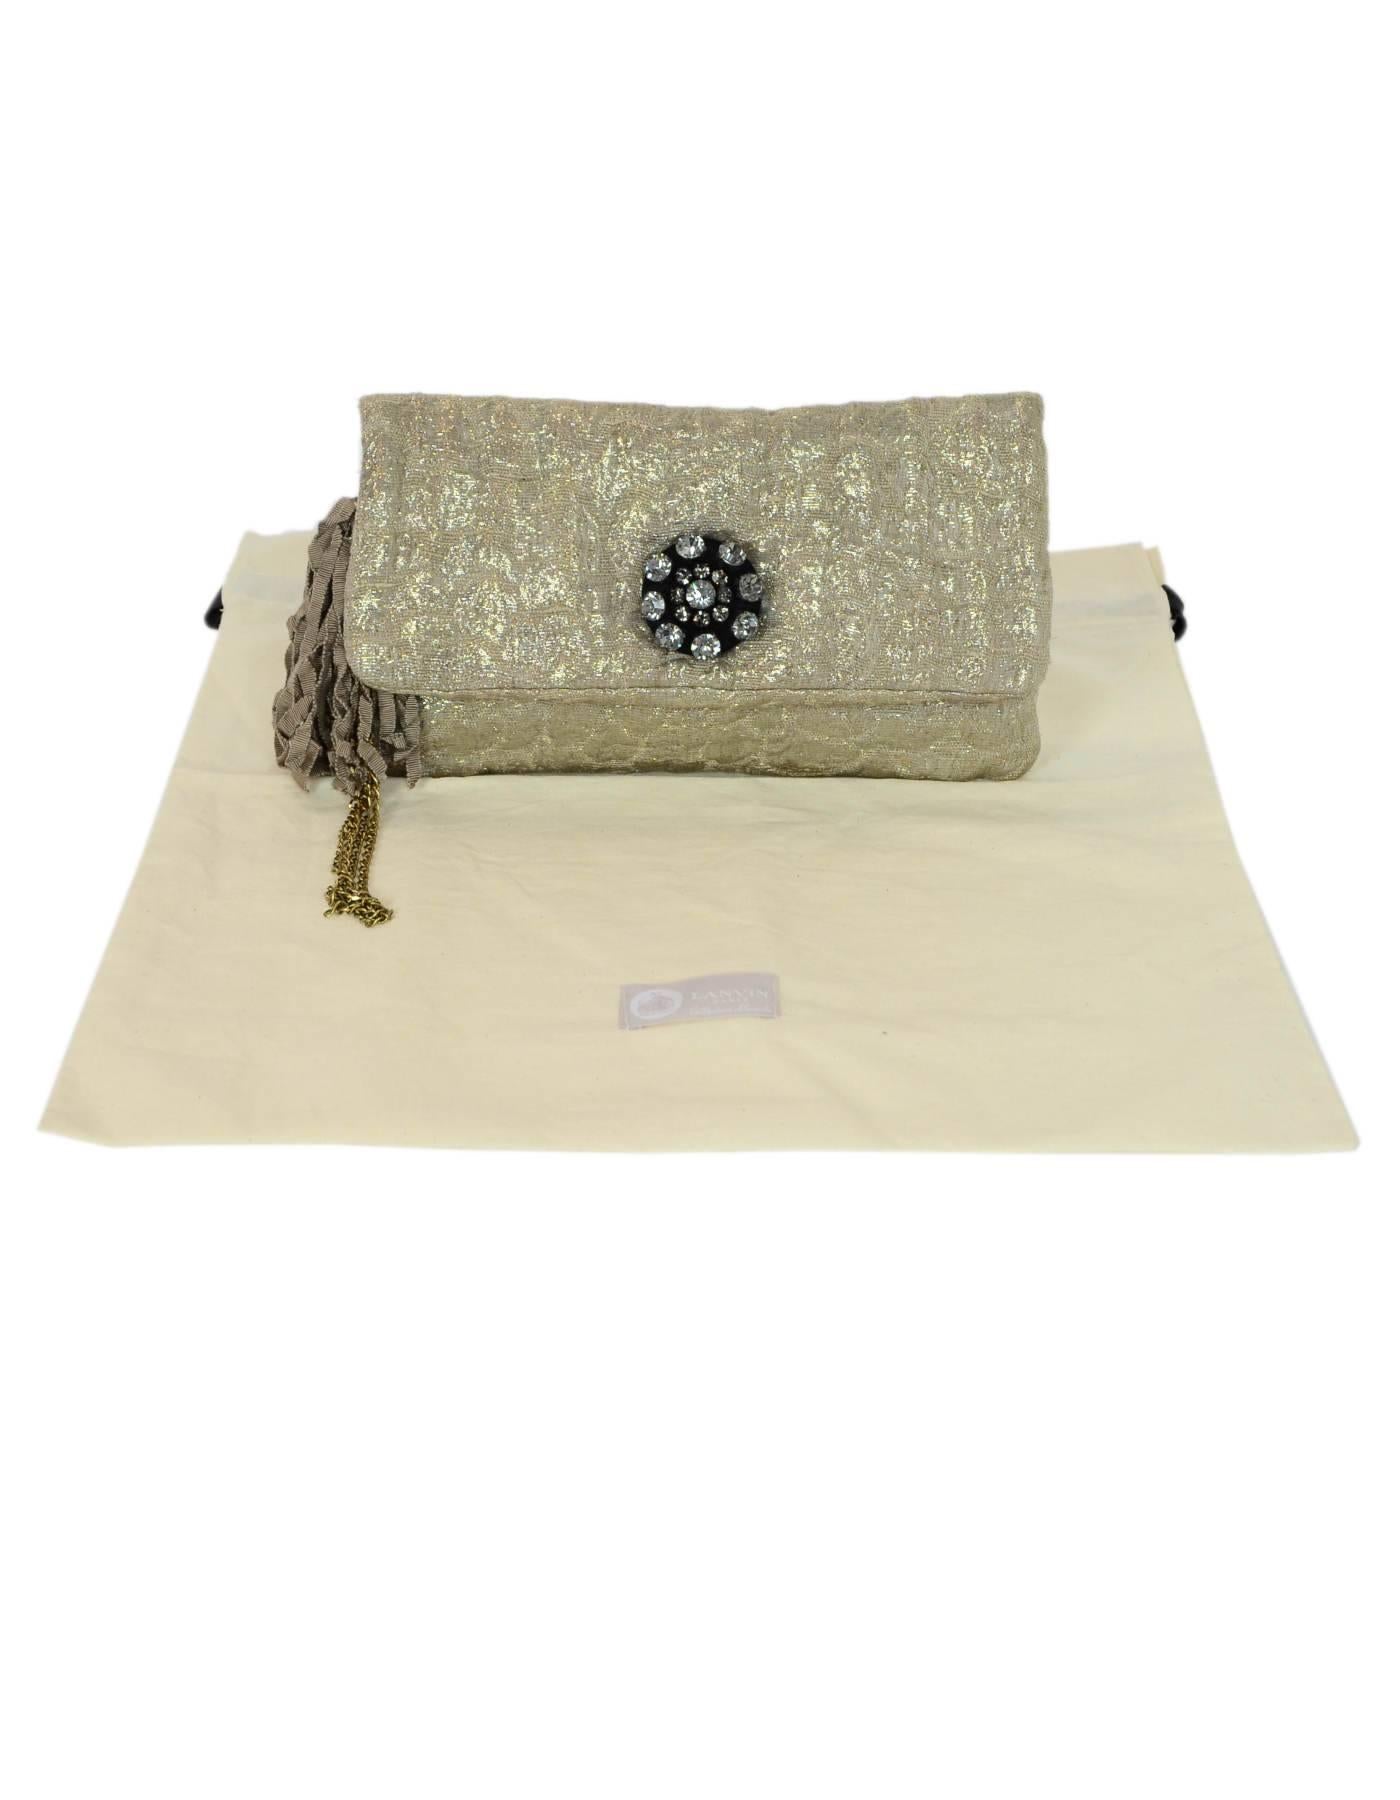 Lanvin Gold Lurex Sac Oulouette Clutch/Wristlet Bag with Dust Bag 3